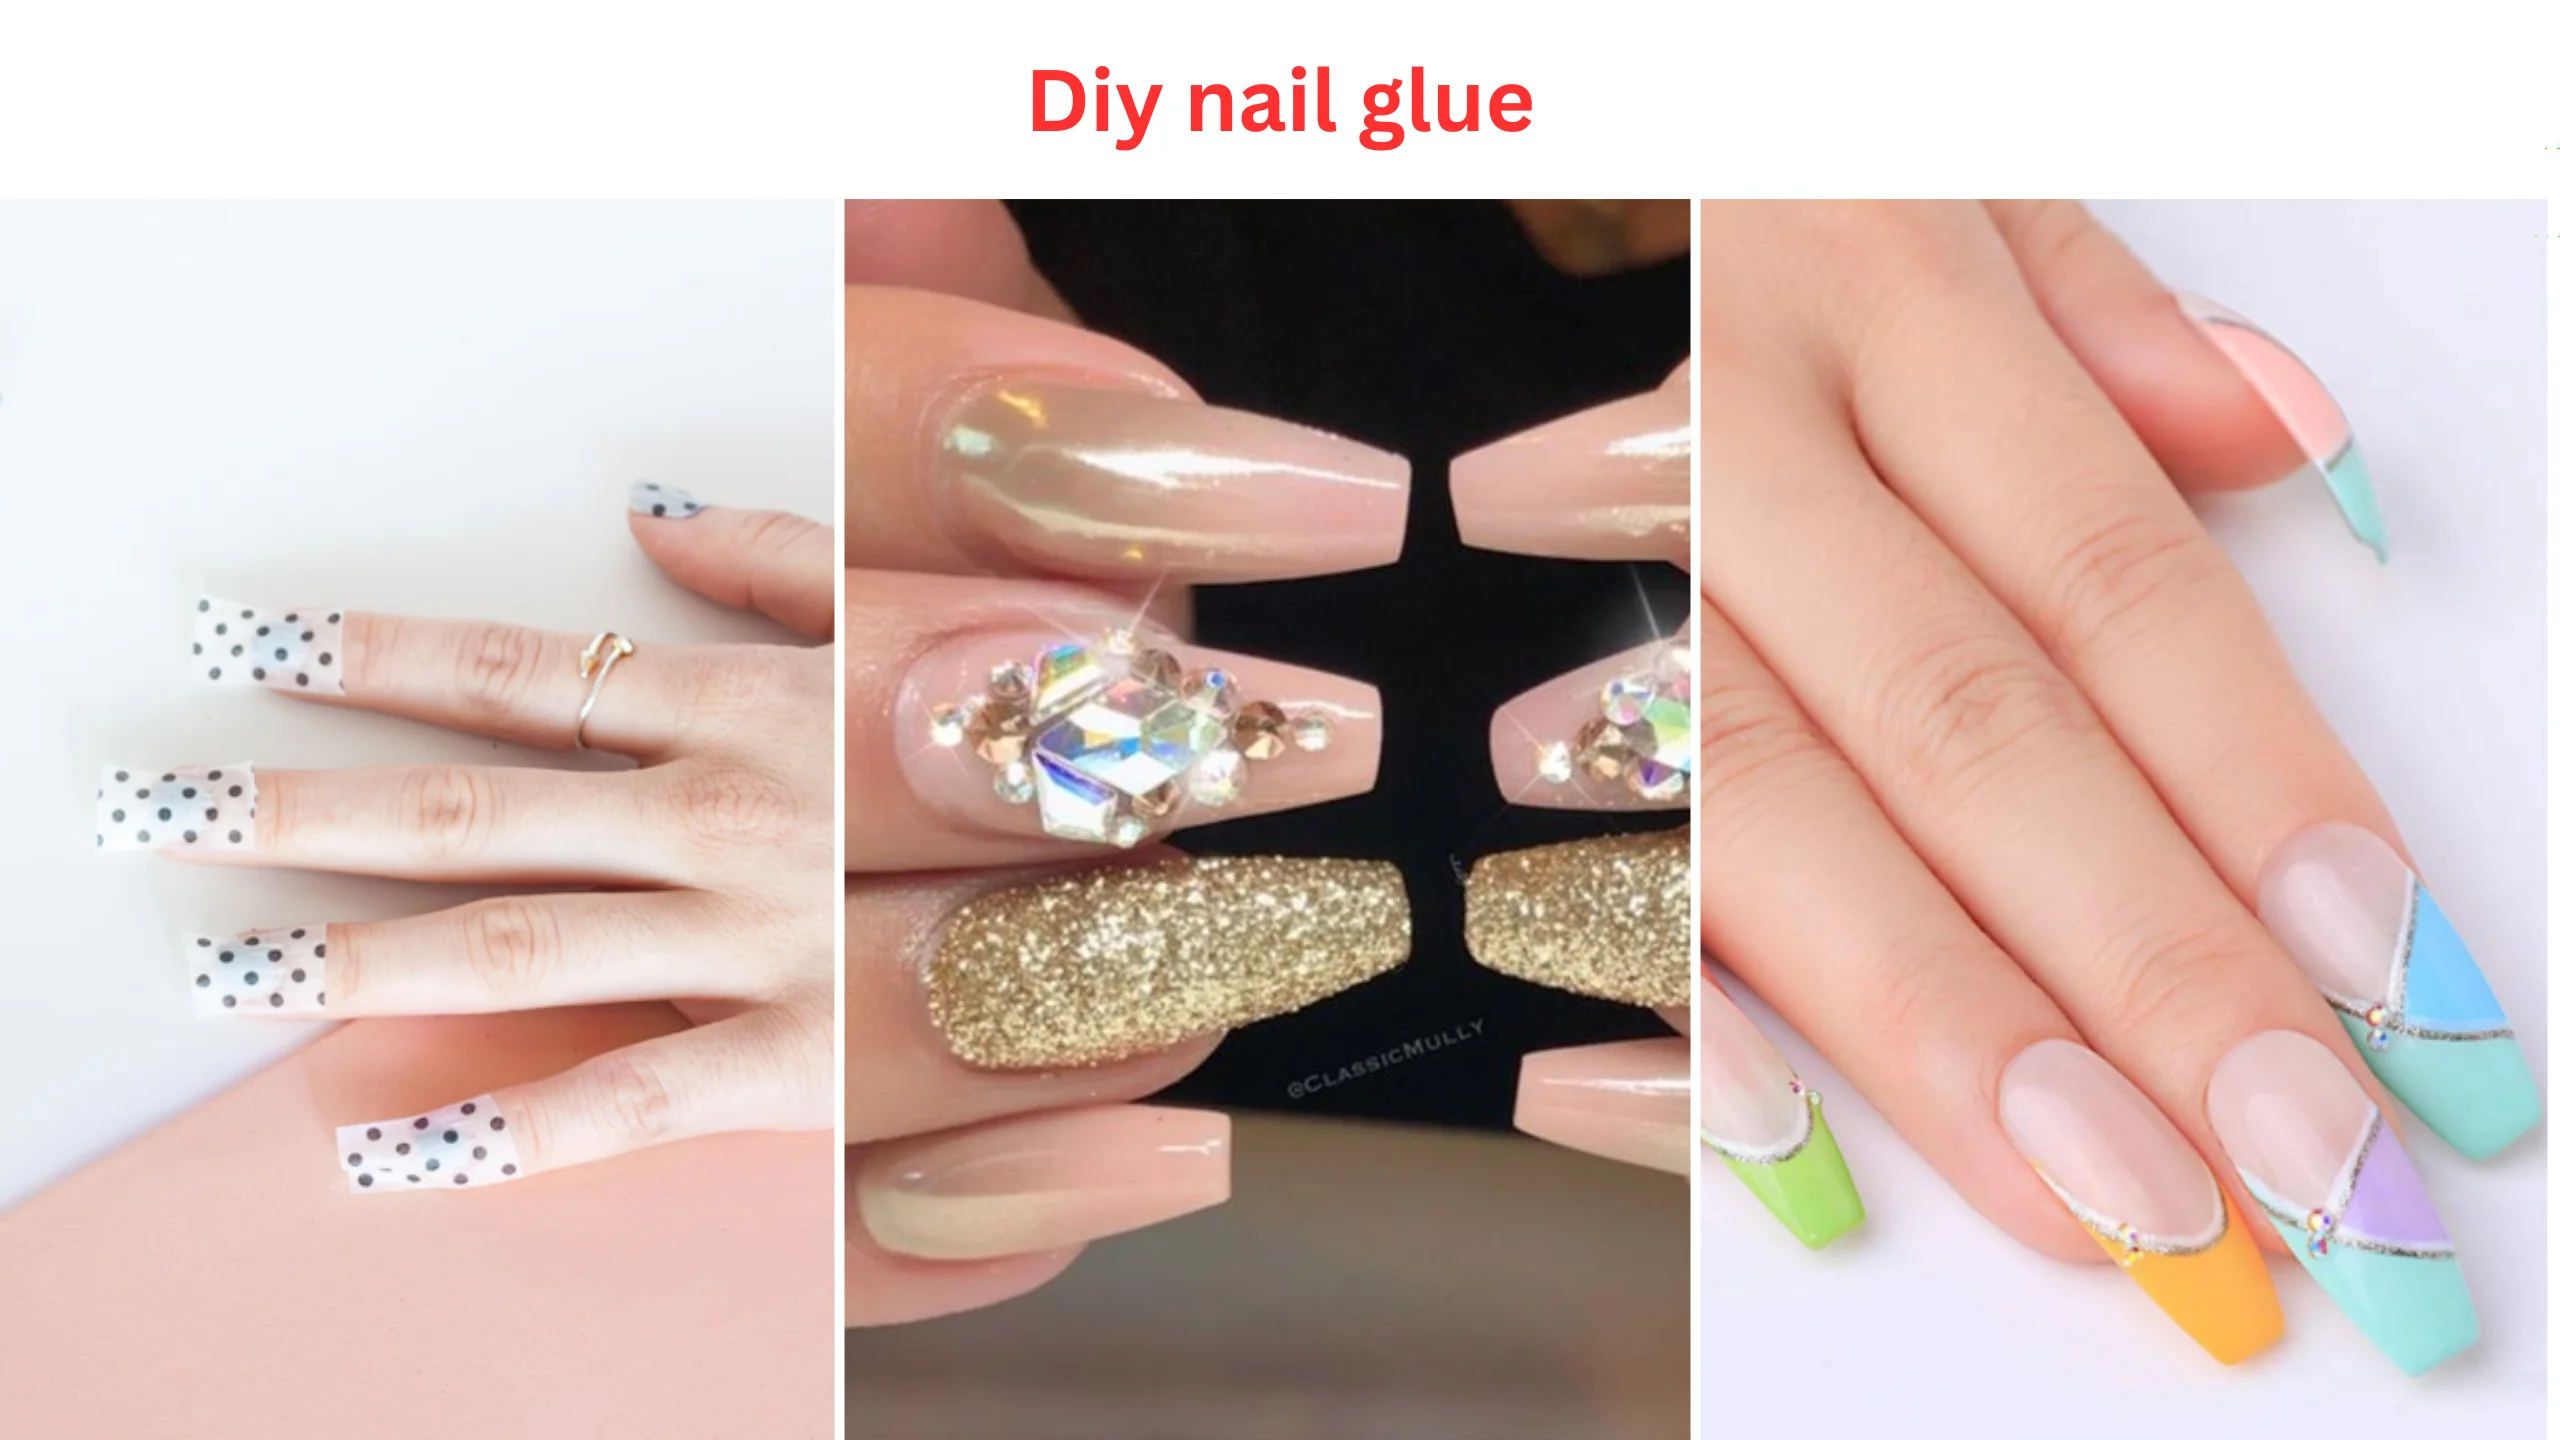 Diy nail glue